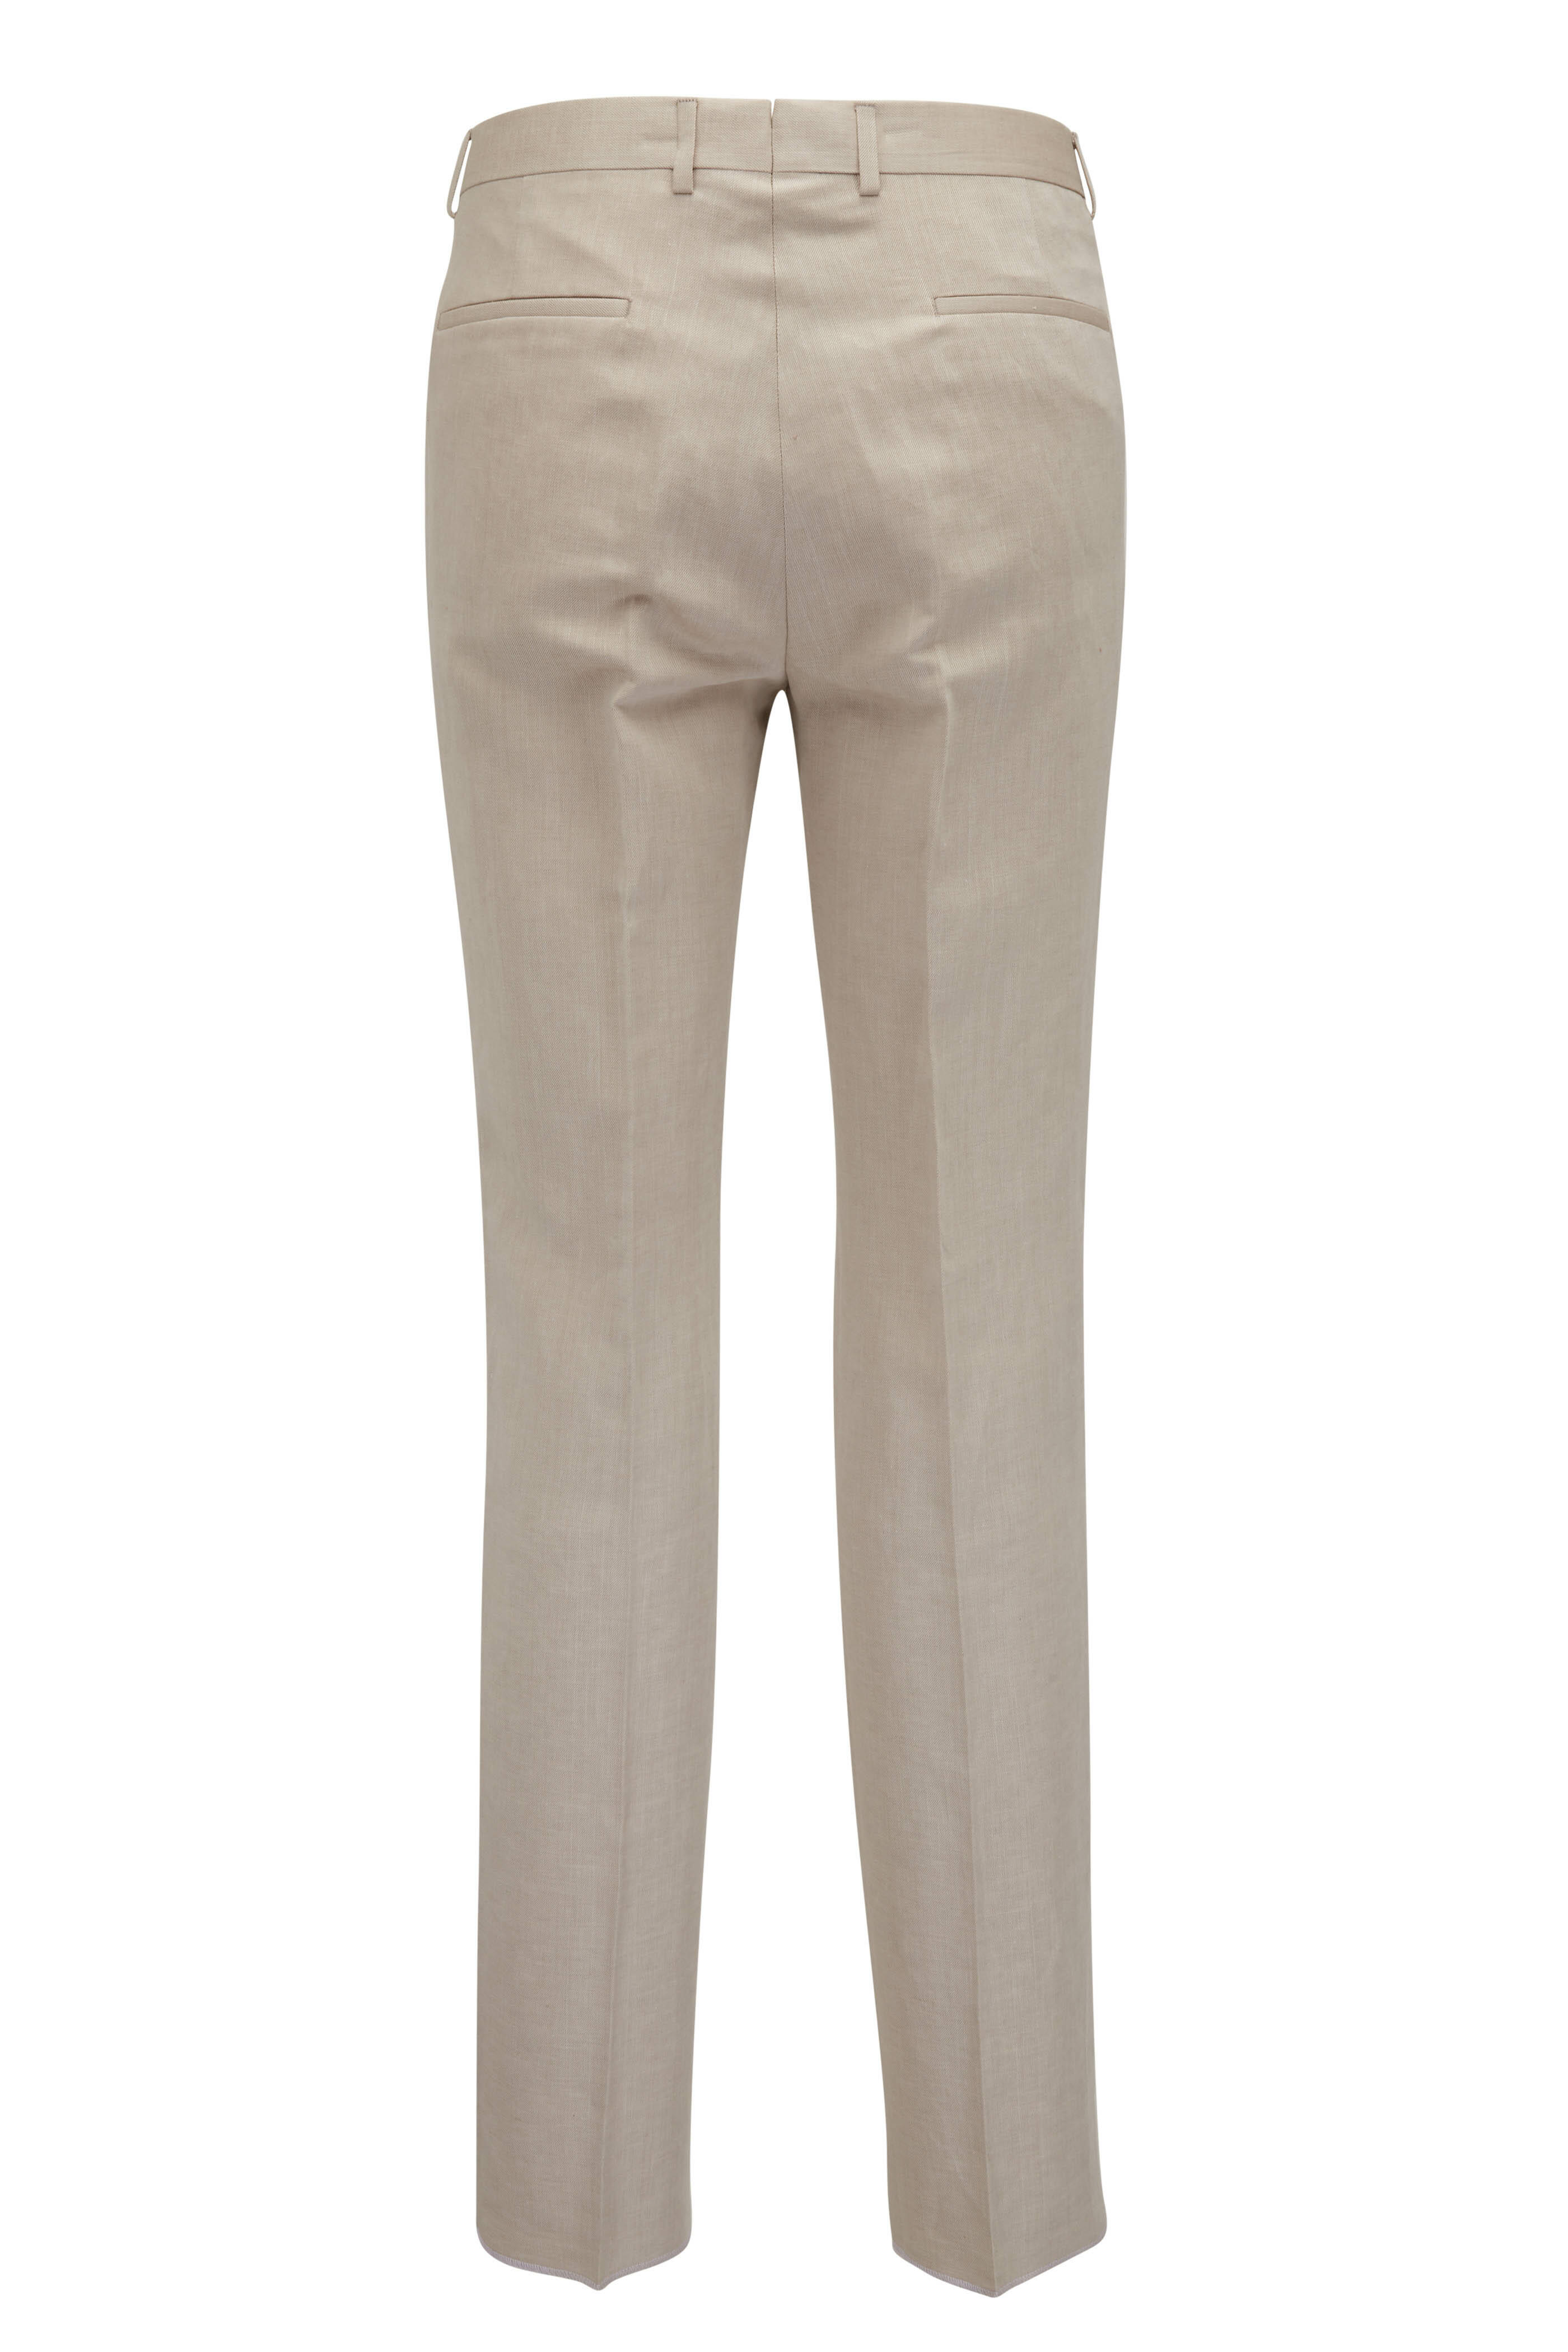 Zegna - Natural Stretch Linen Dress Pant | Mitchell Stores